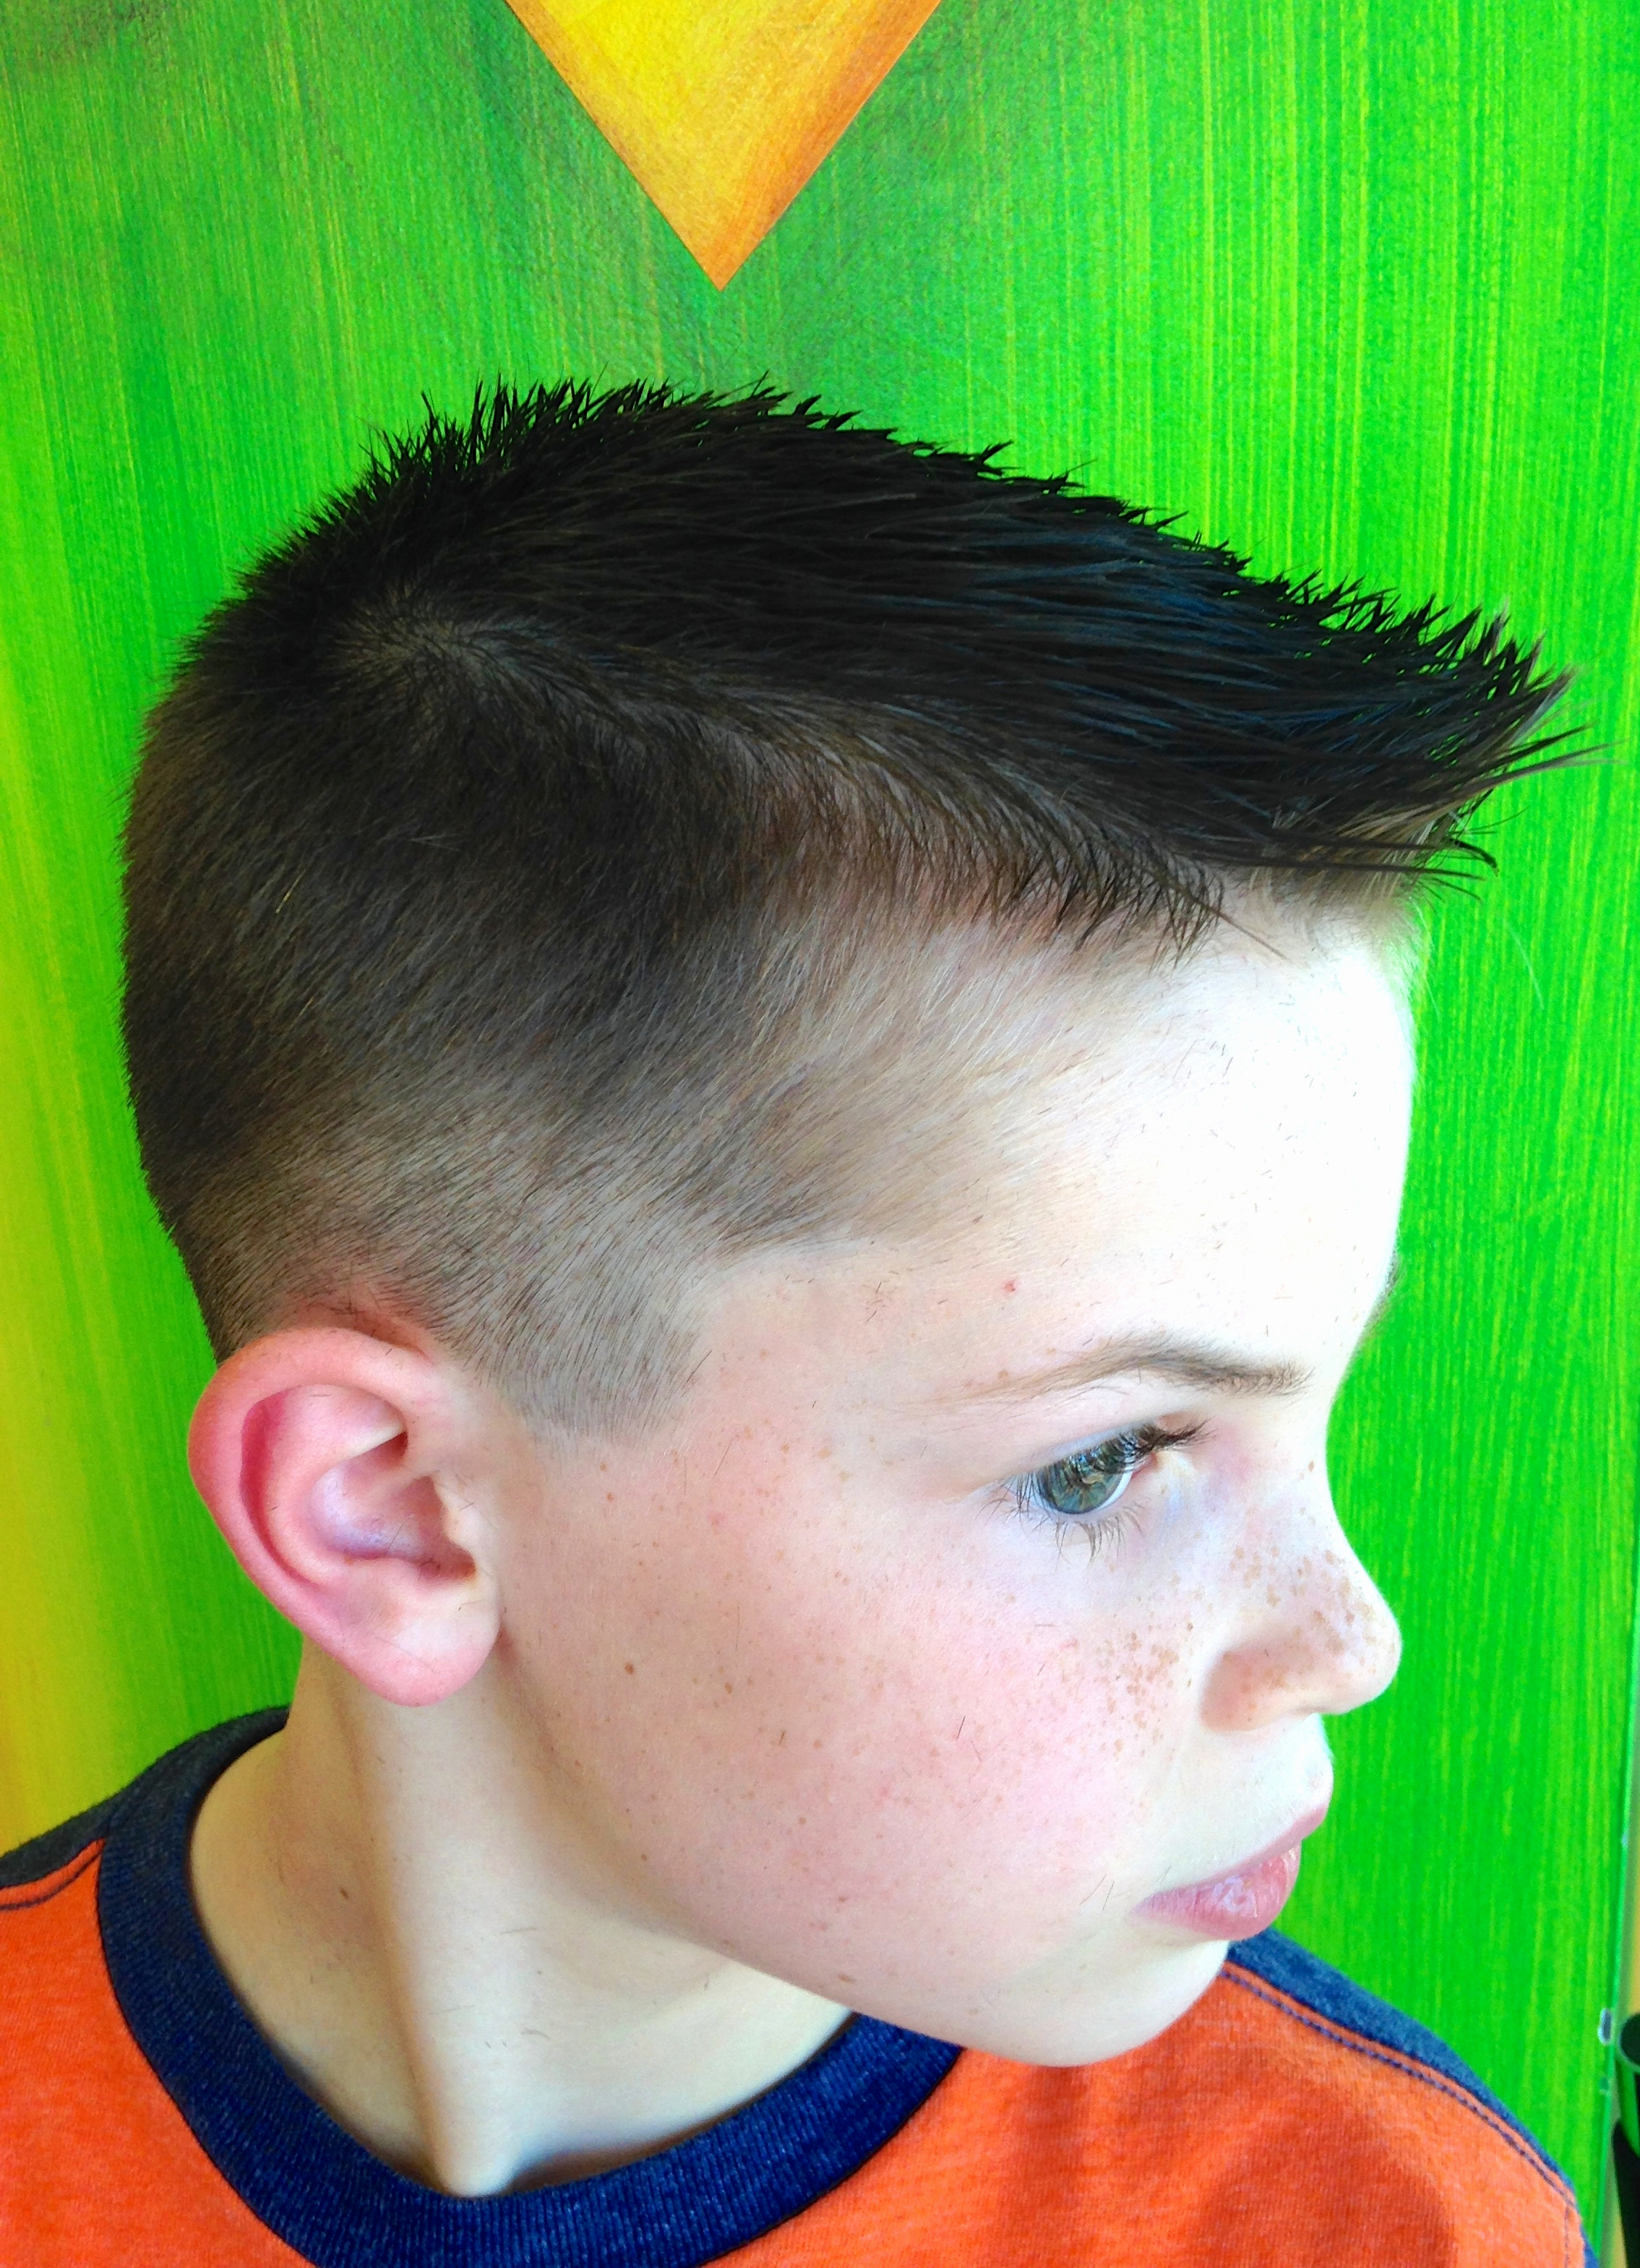 Best Of School Boy Haircut Style - Hair Cut Ideas - Hair Cut Ideas